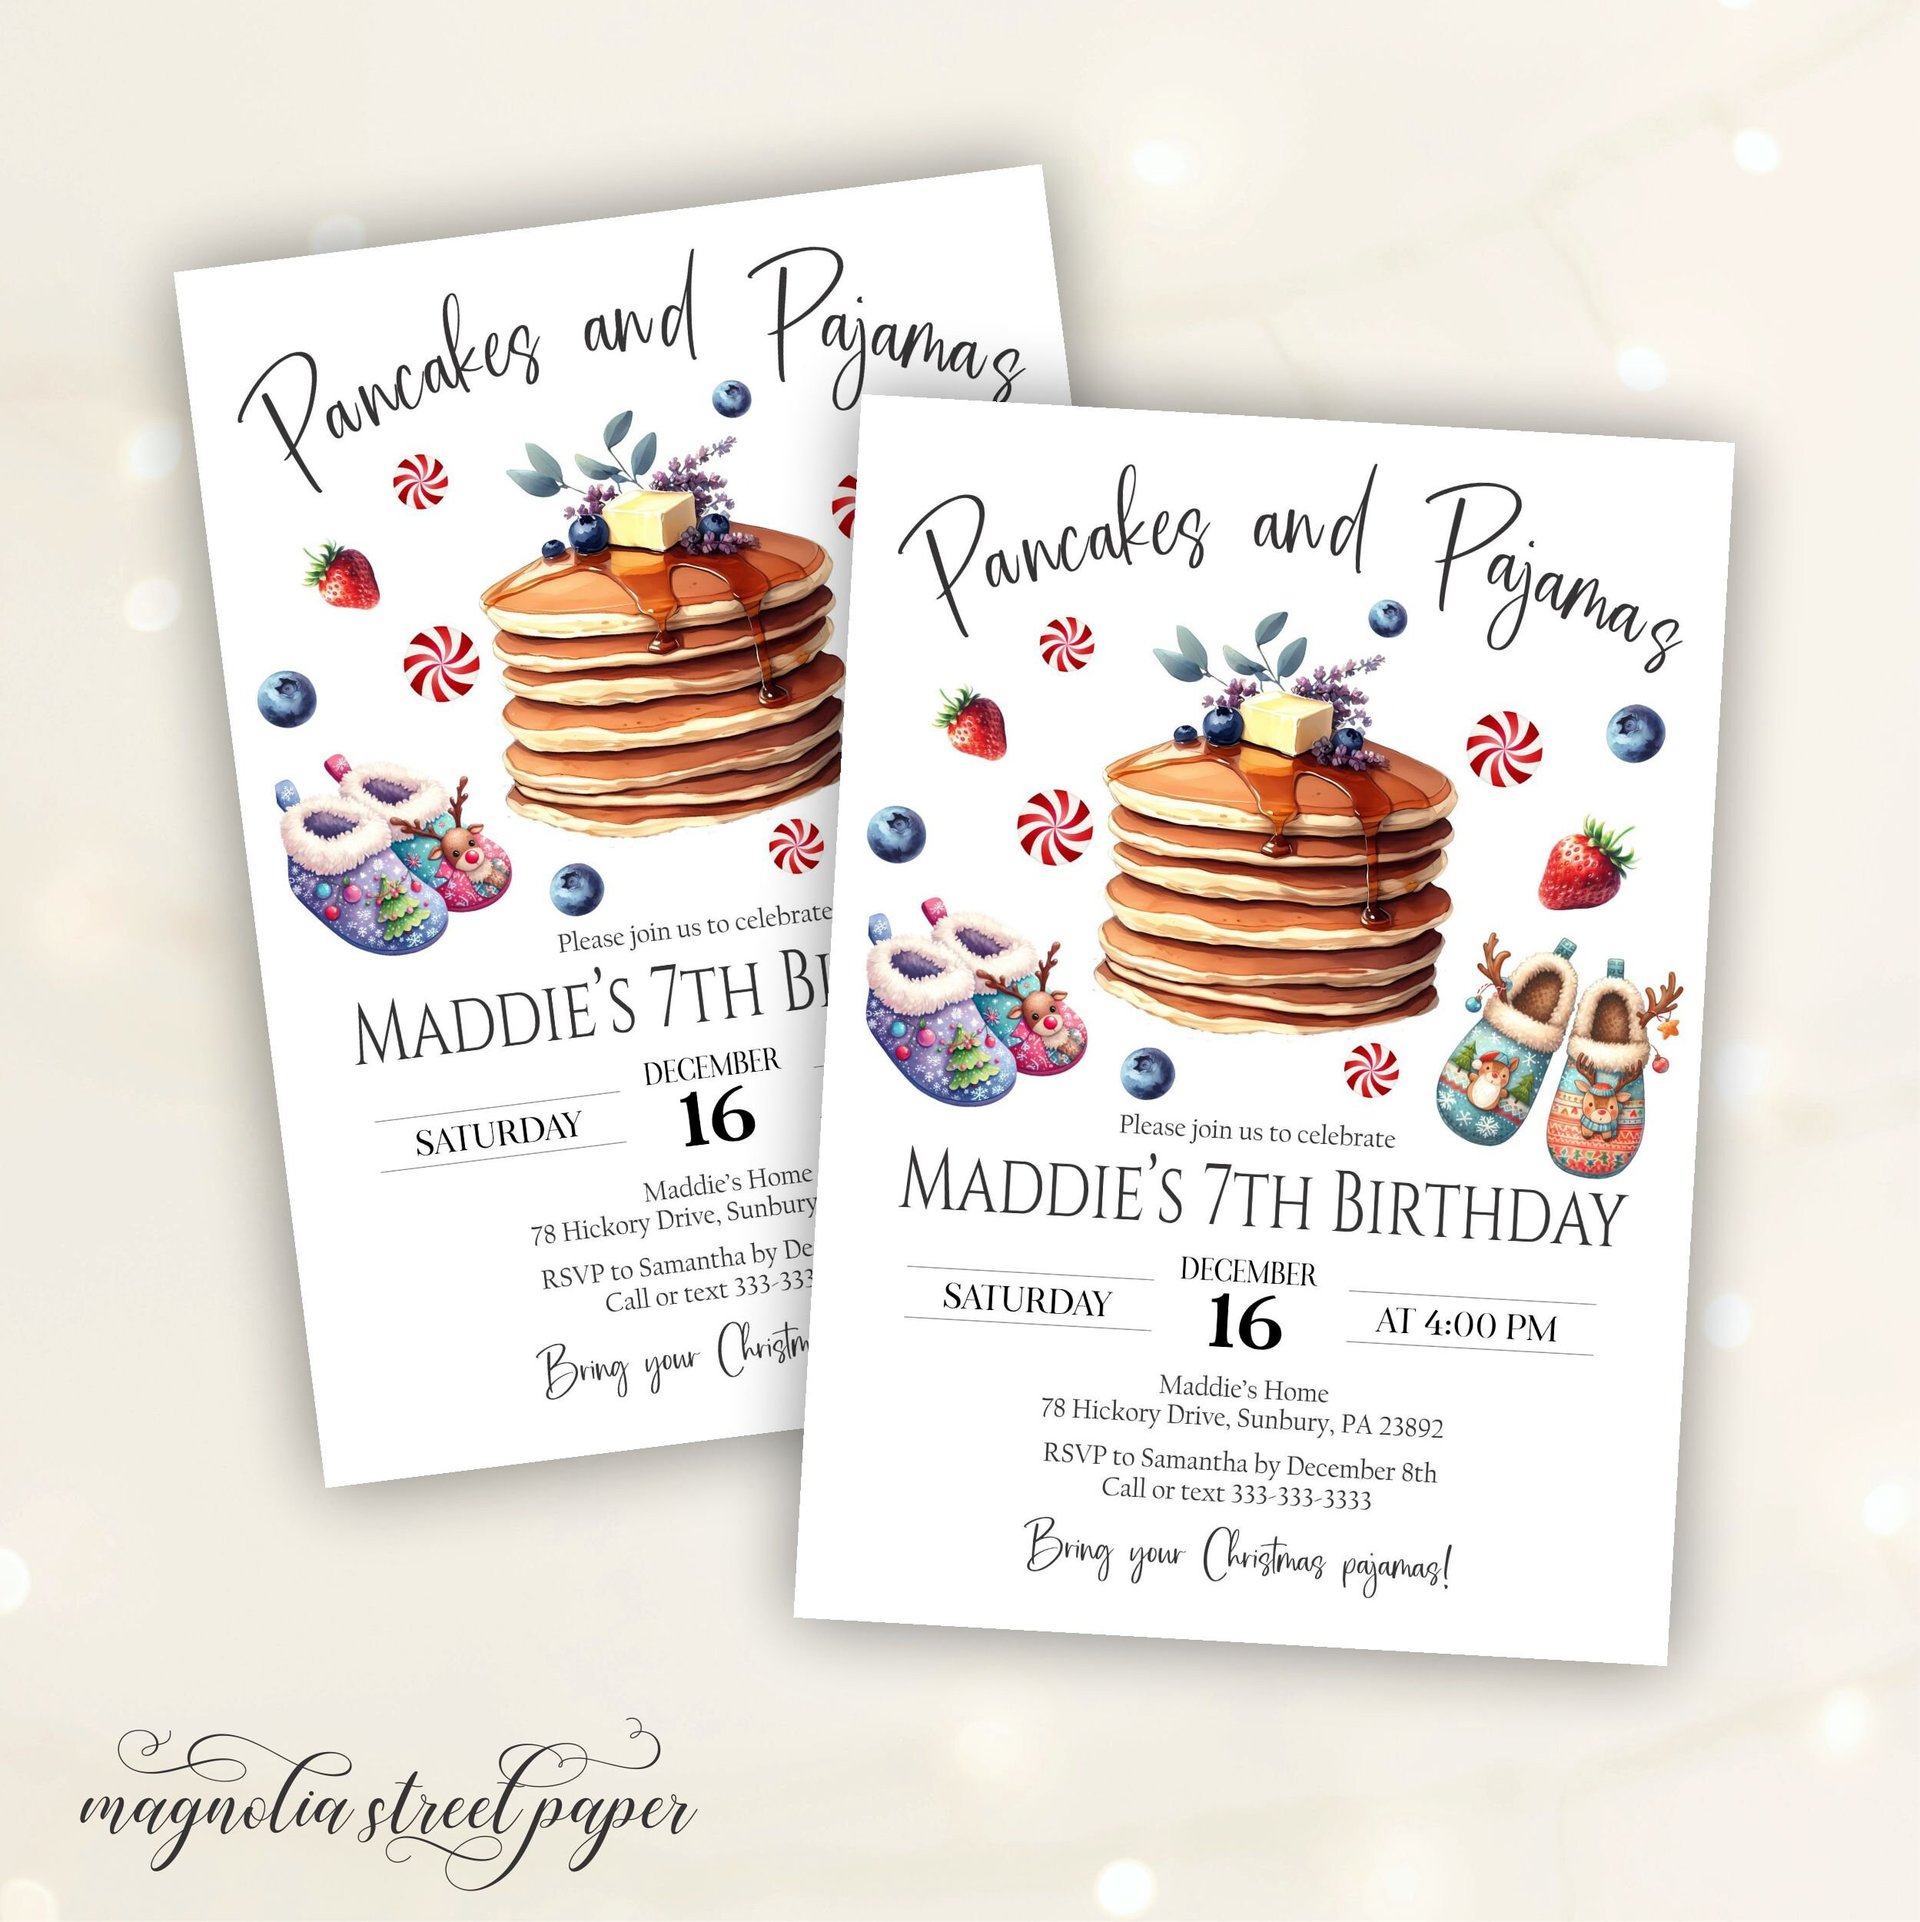 Pancakes and Pajamas Birthday Party Invitation, Christmas Breakfast Party